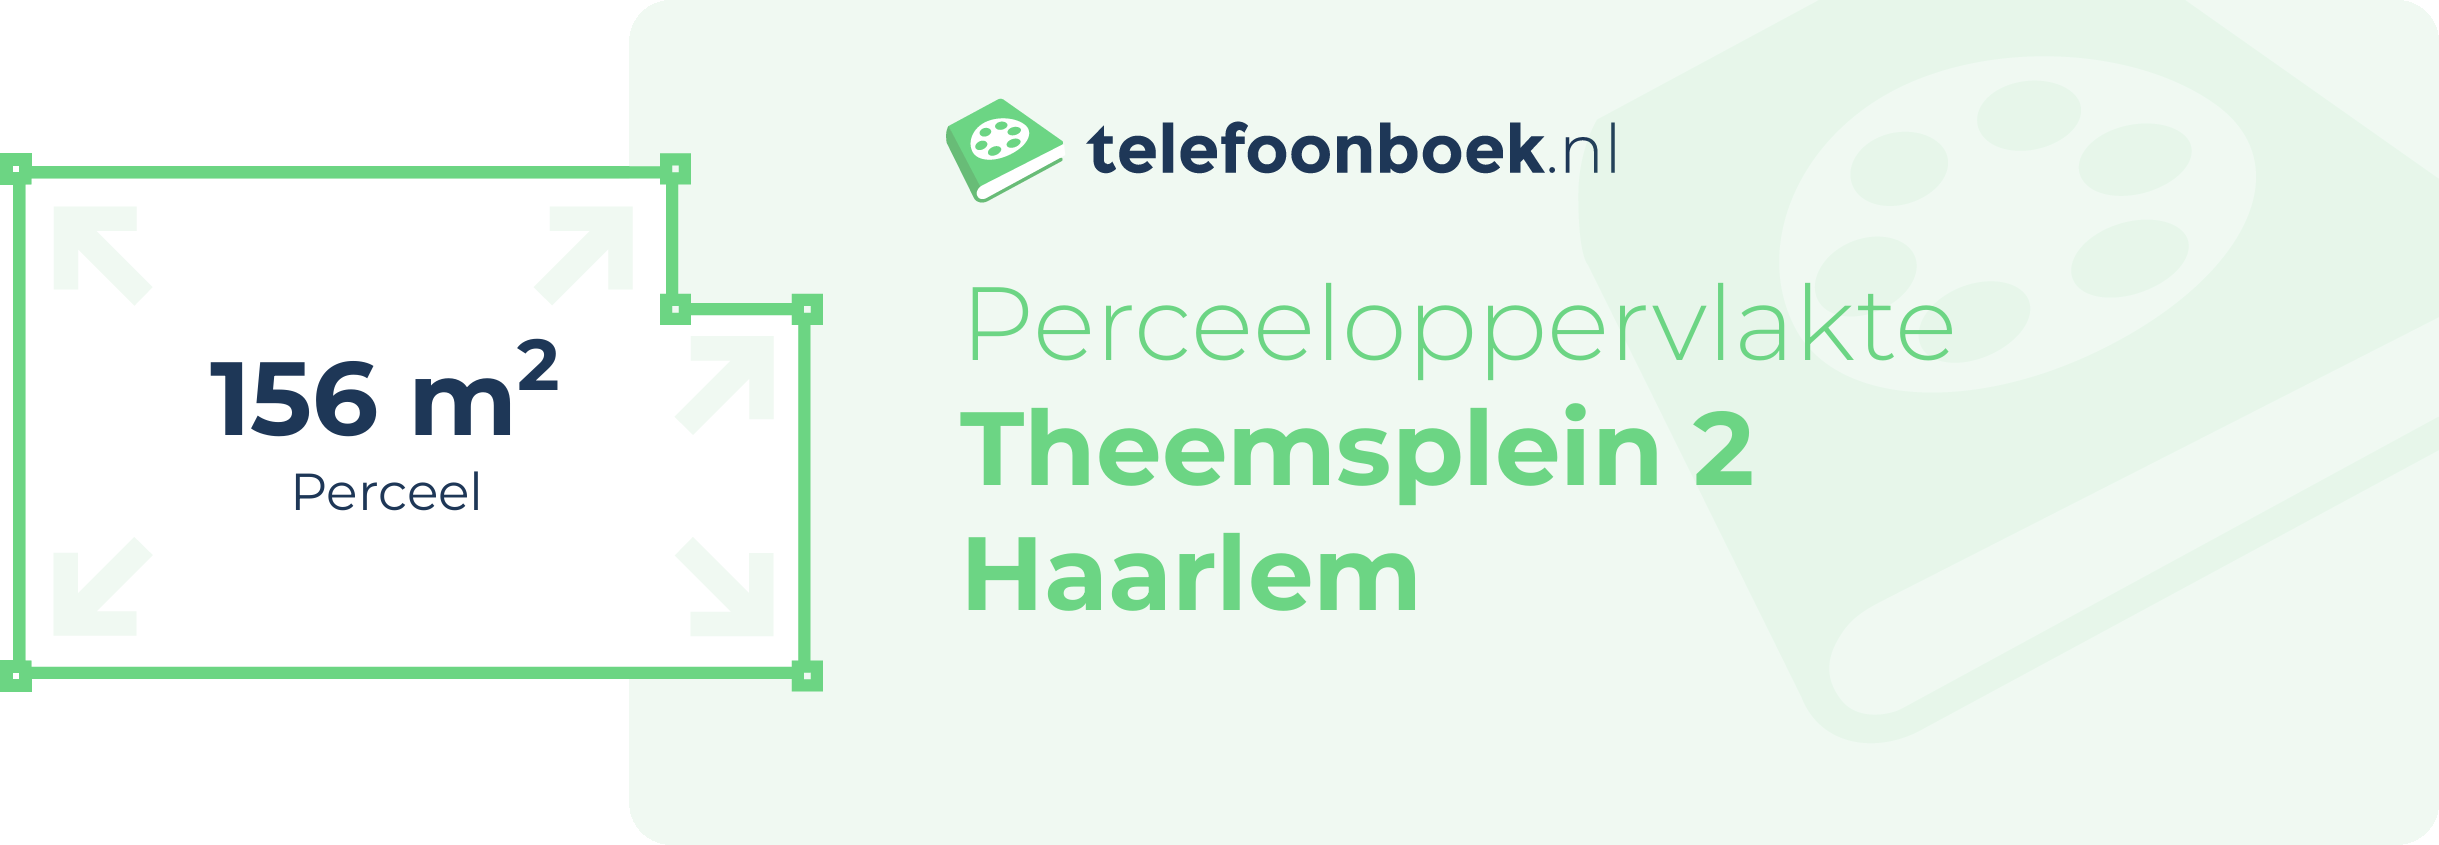 Perceeloppervlakte Theemsplein 2 Haarlem